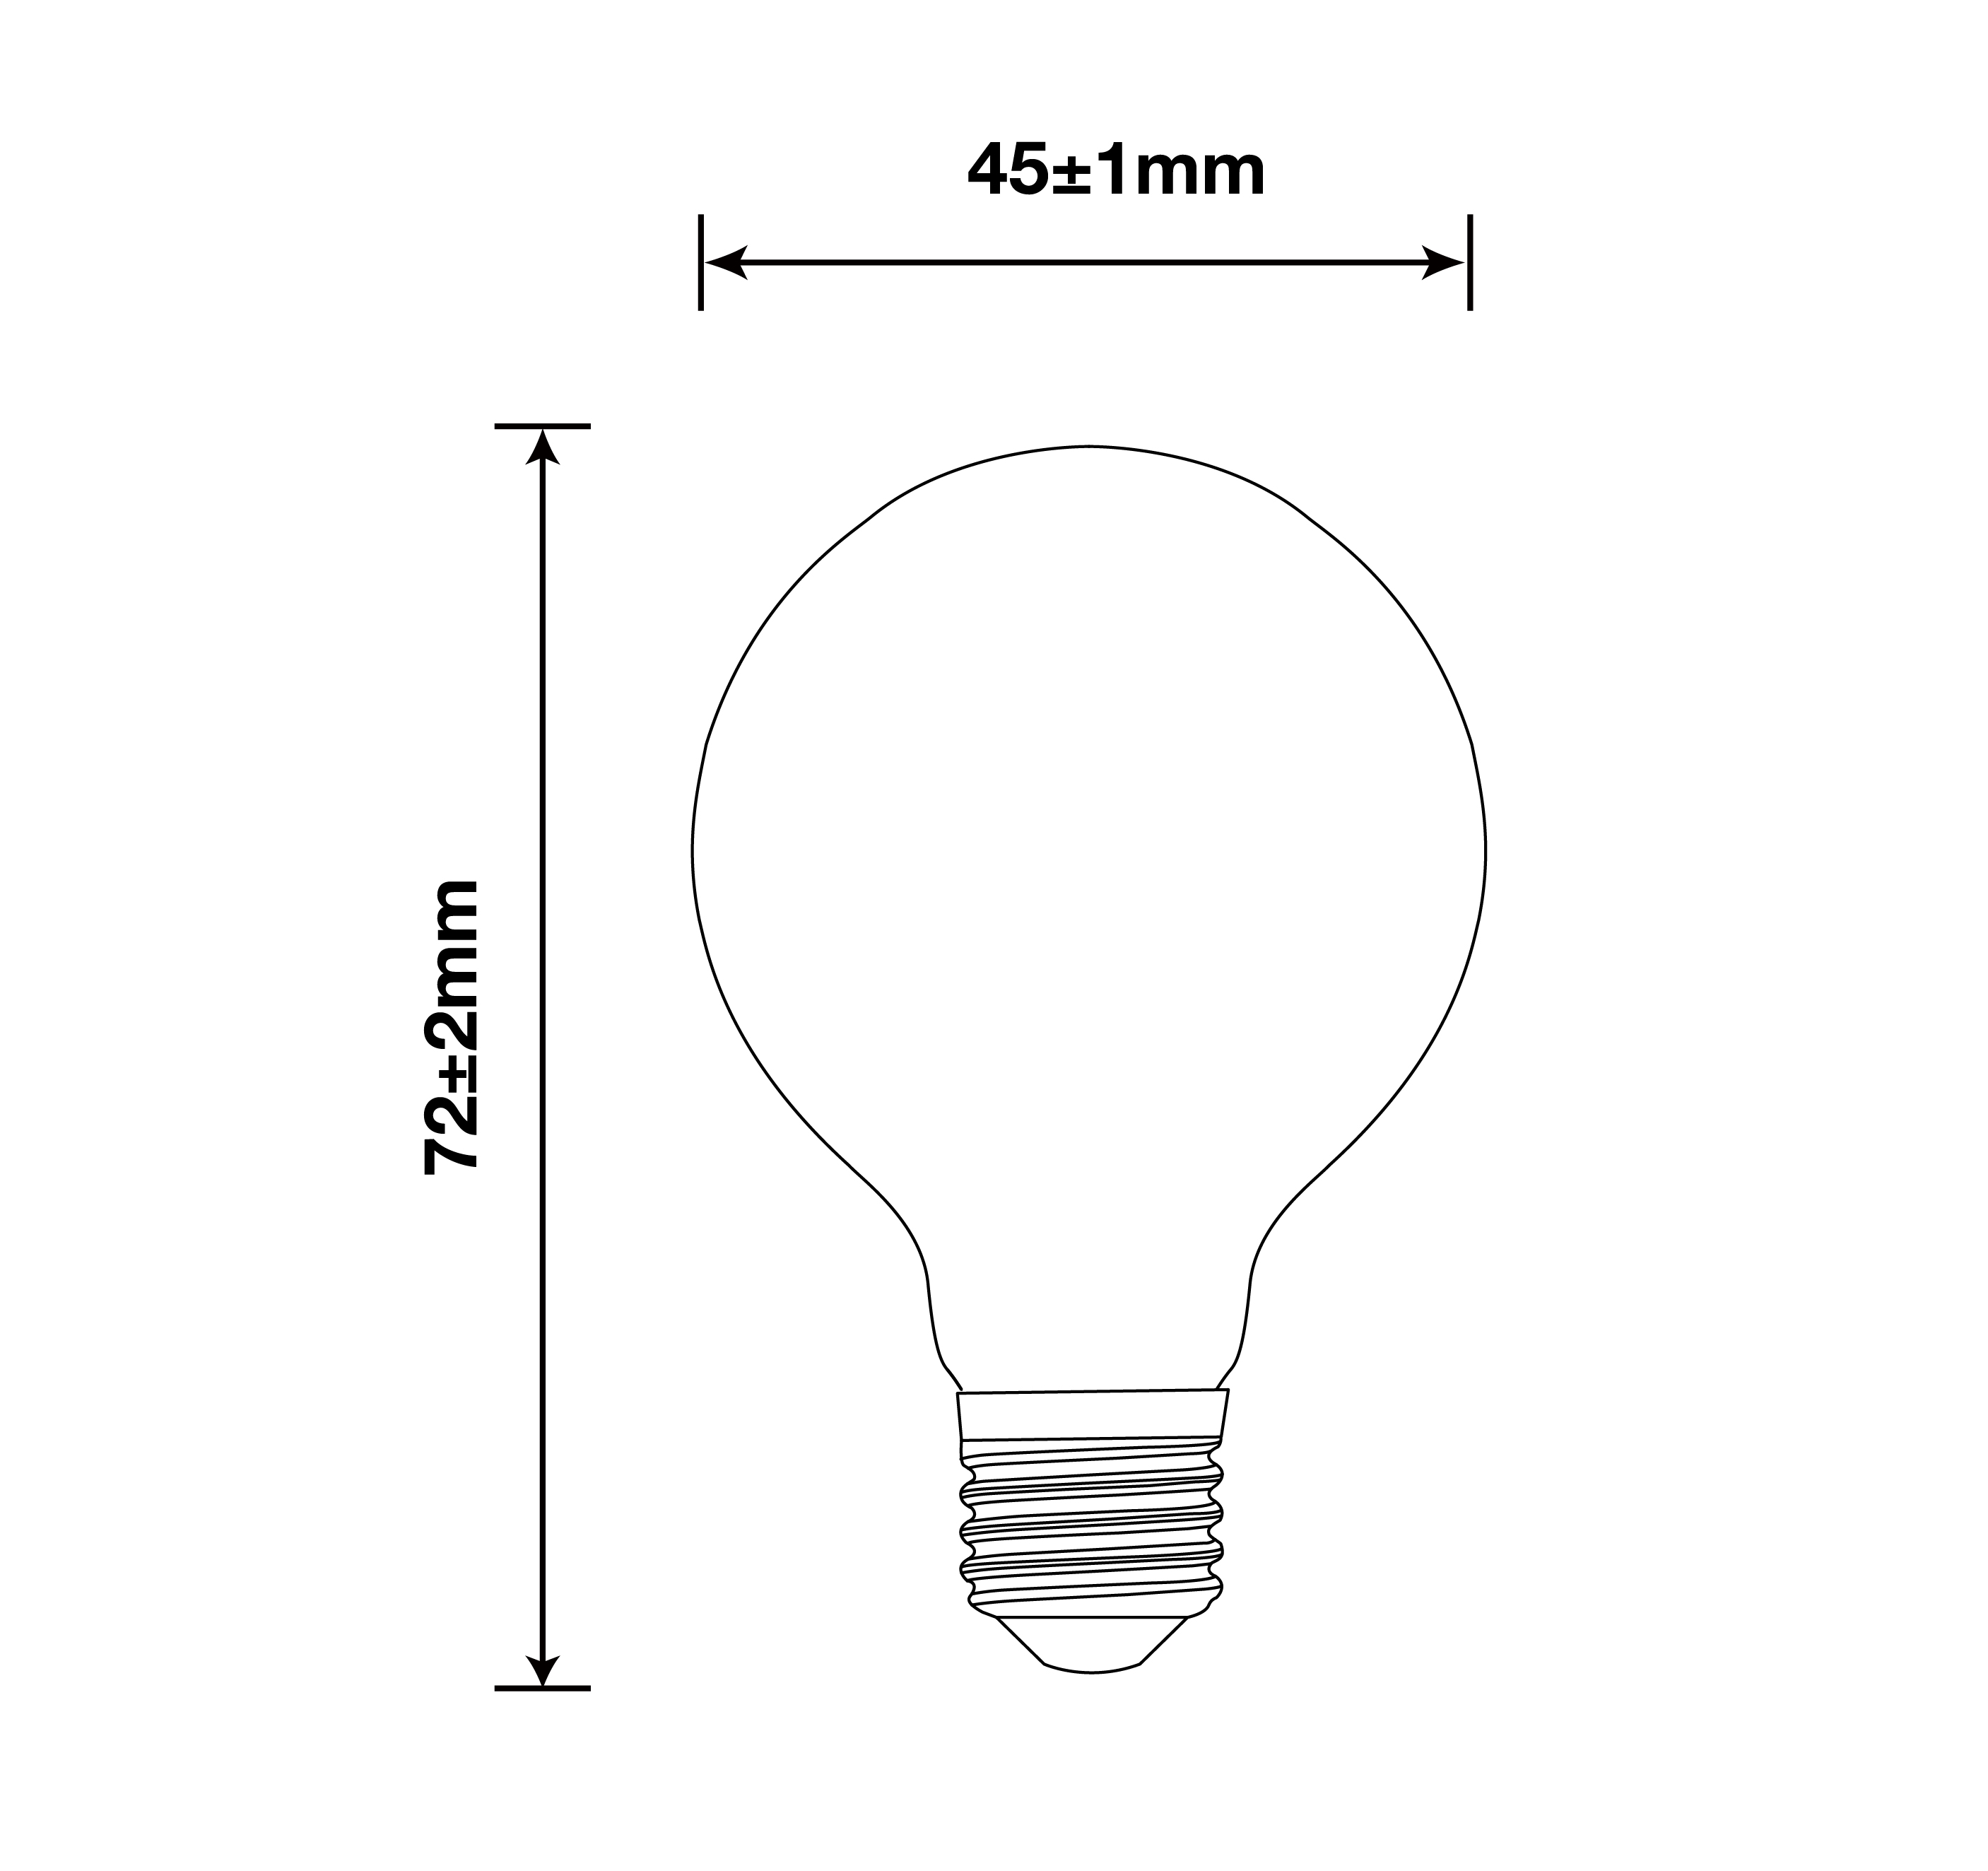 12W G25 Filament Bulbs/100Watts Edison G25 Bulbs